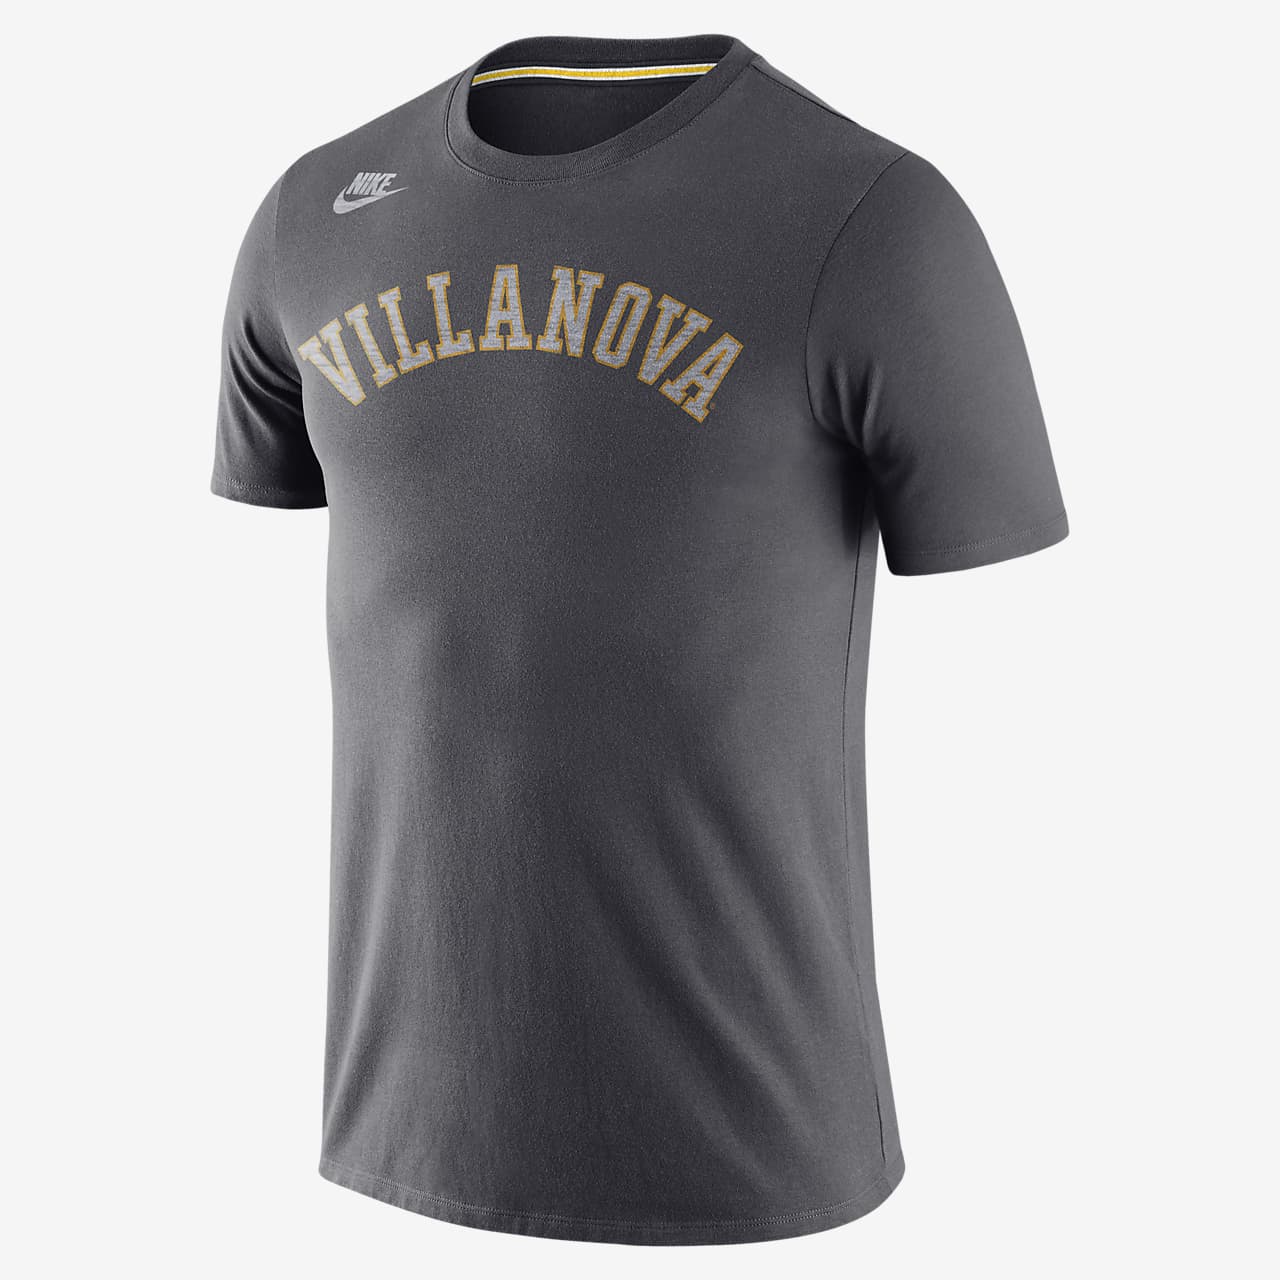 Nike College Retro (Villanova) Men's T-Shirt.